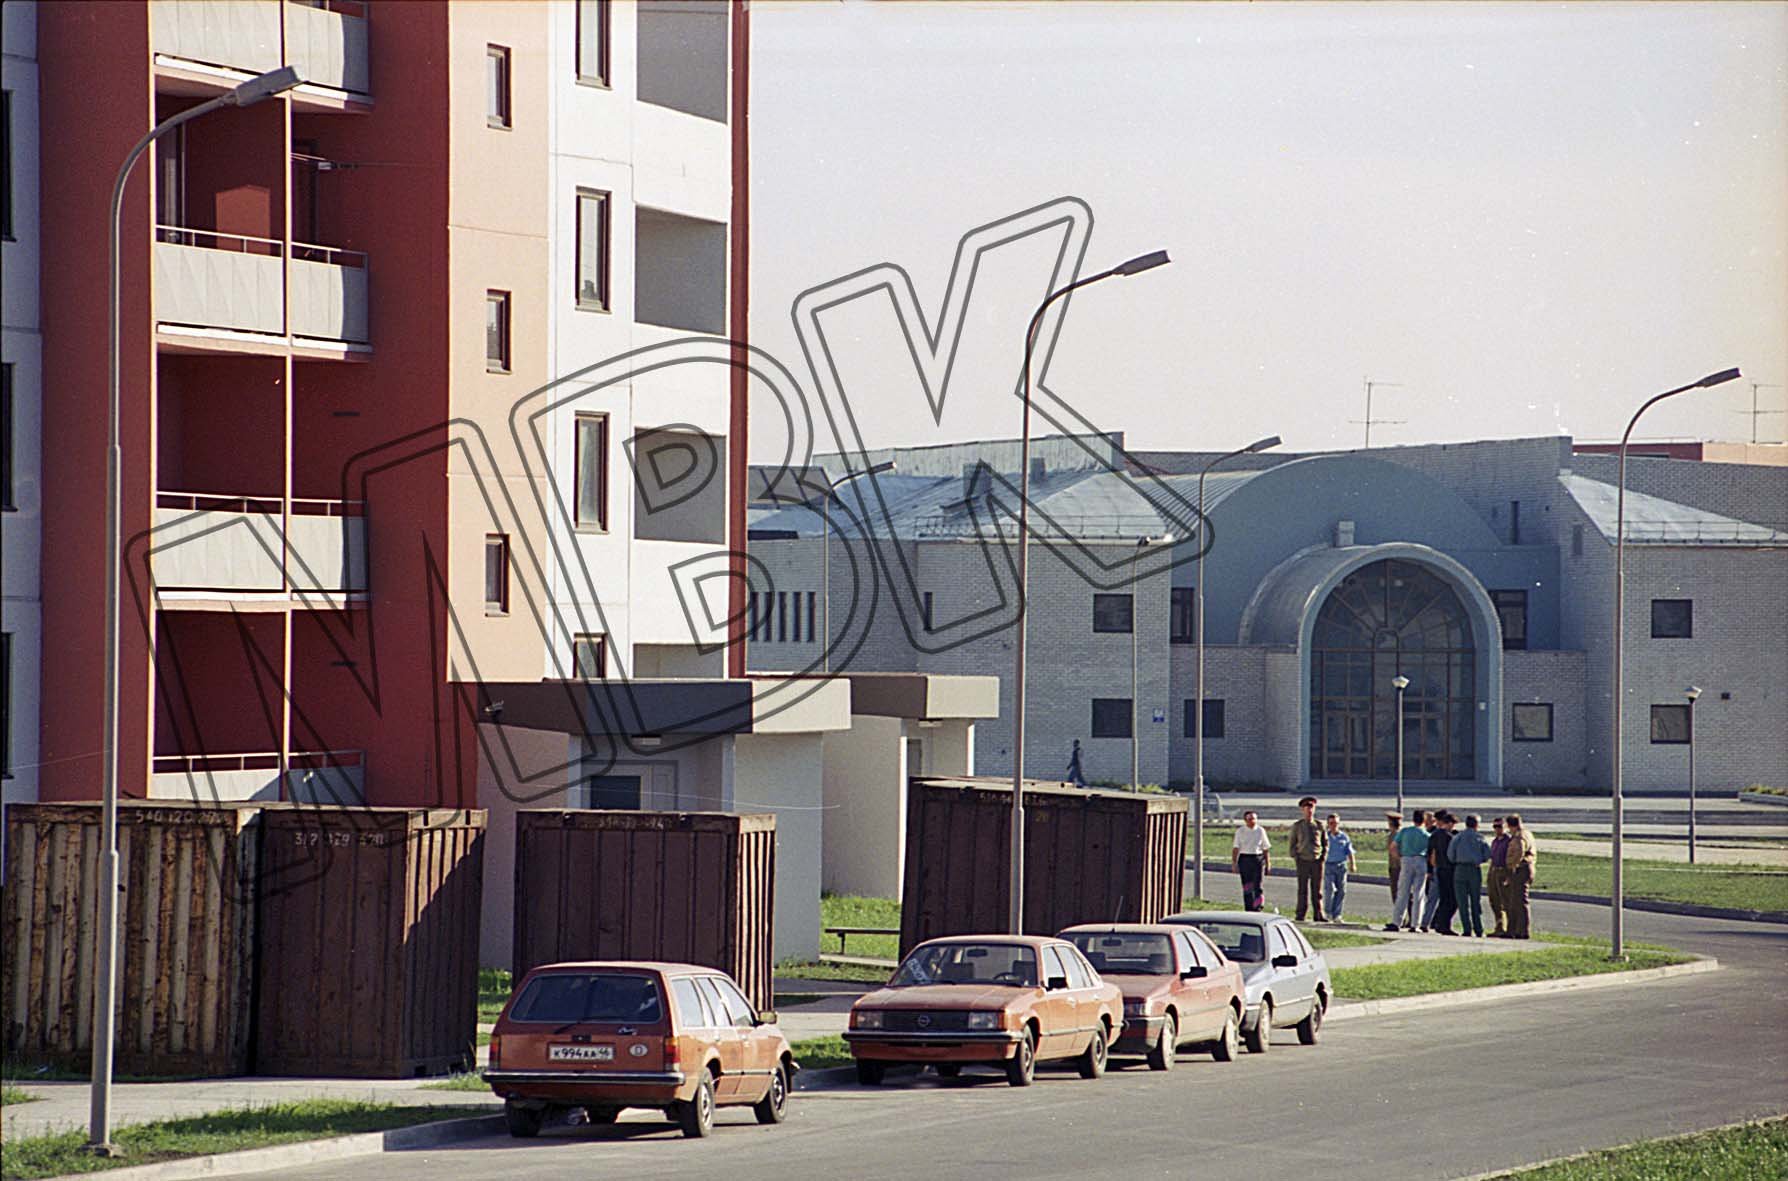 Fotografie: Neubaugebiet für Offiziersfamilien der Berlin-Brigade, Kursk, vermutlich 5./6. September 1994 (Museum Berlin-Karlshorst RR-P)